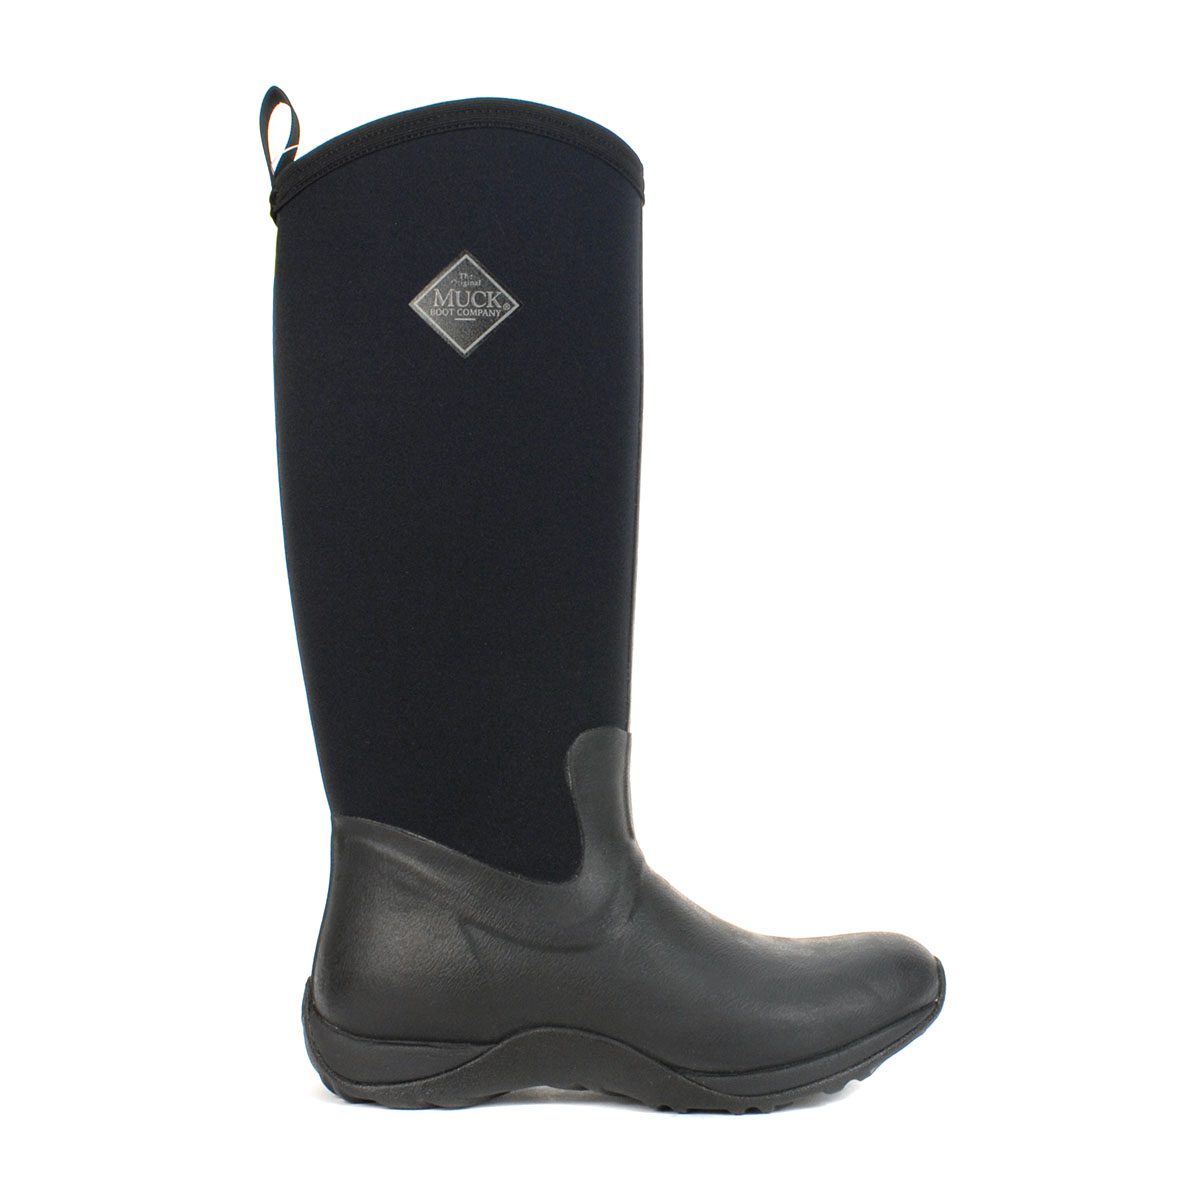 Muck Boots Women's Arctic Adventure Tall Black Rubber Rain/Winter Boots - WOOKI.COM